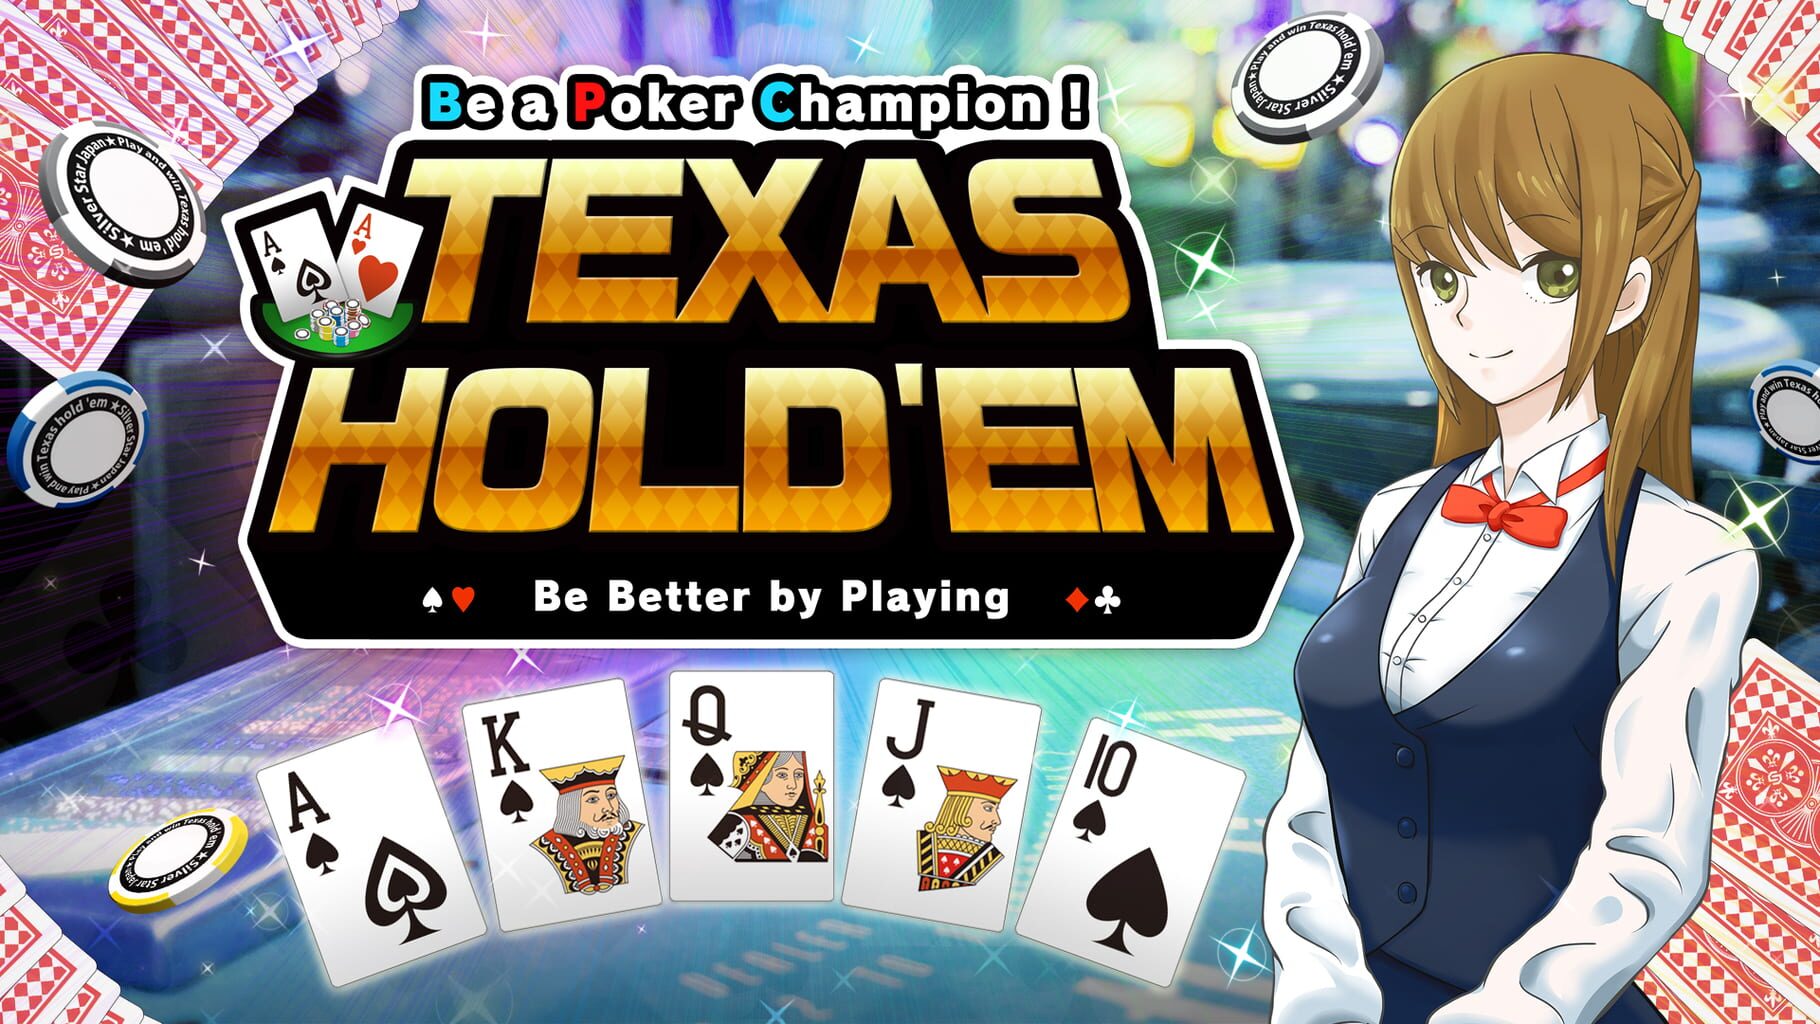 Be a Poker Champion! Texas Hold'em artwork